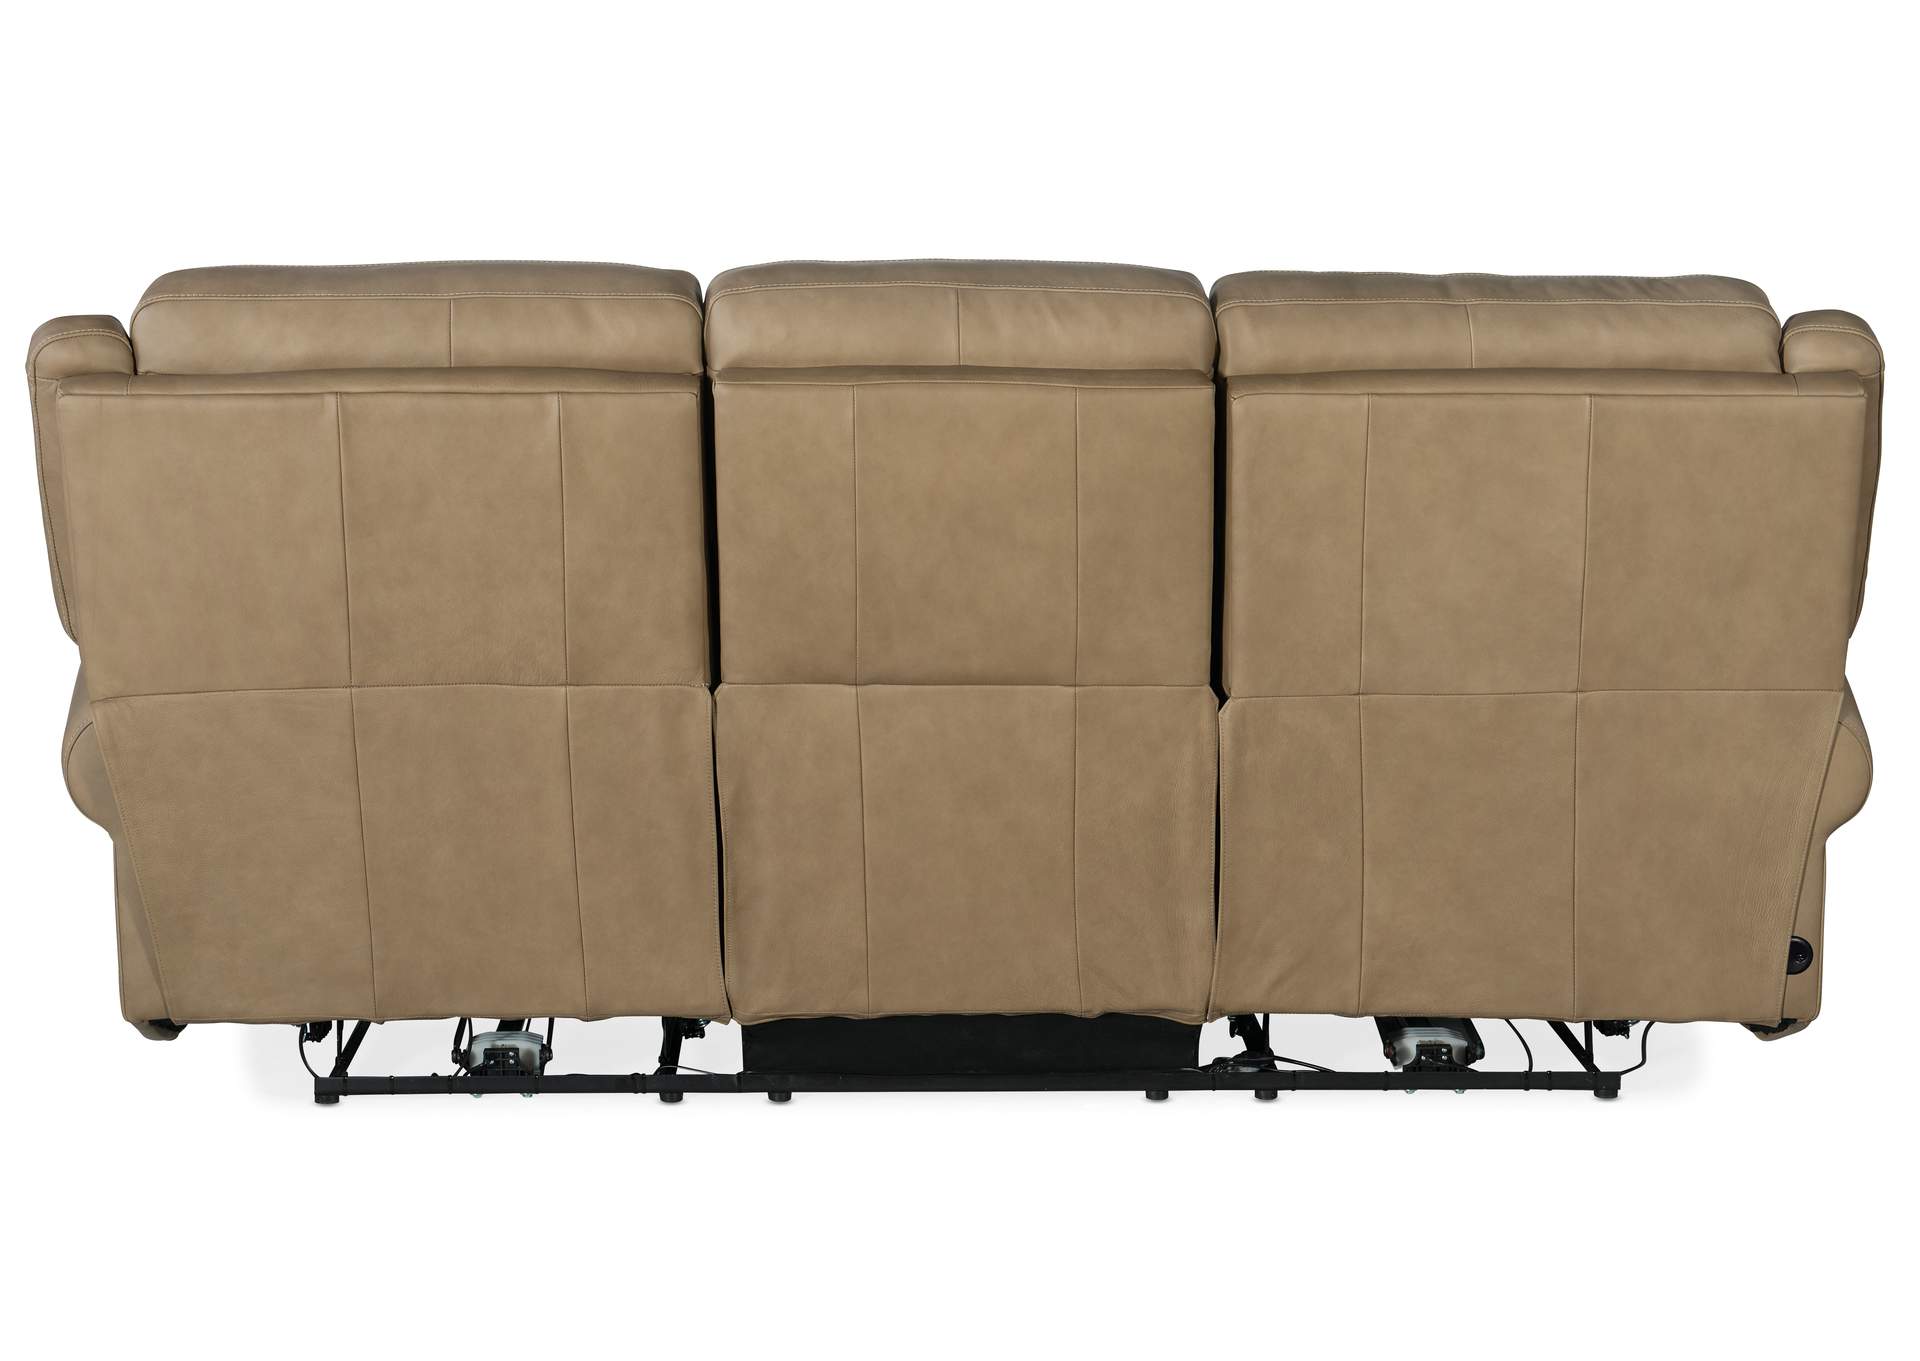 Oberon Zero Gravity Power Sofa With Power Headrest,Hooker Furniture